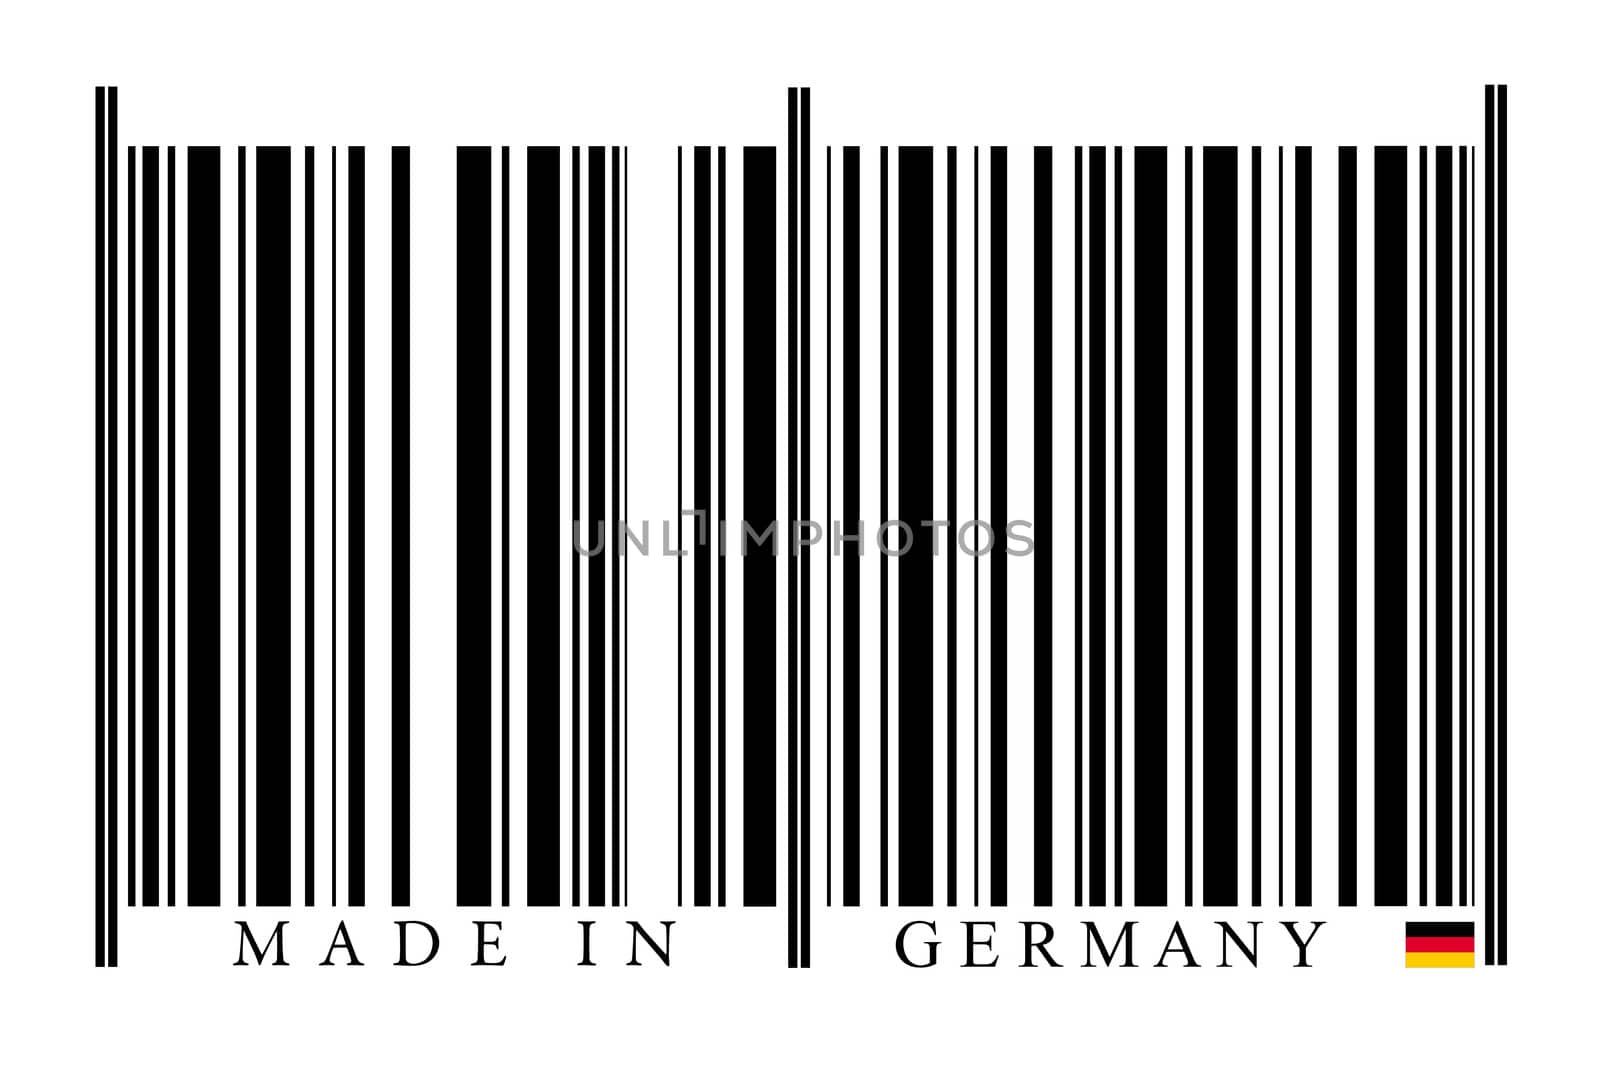 Germany Barcode by gemenacom